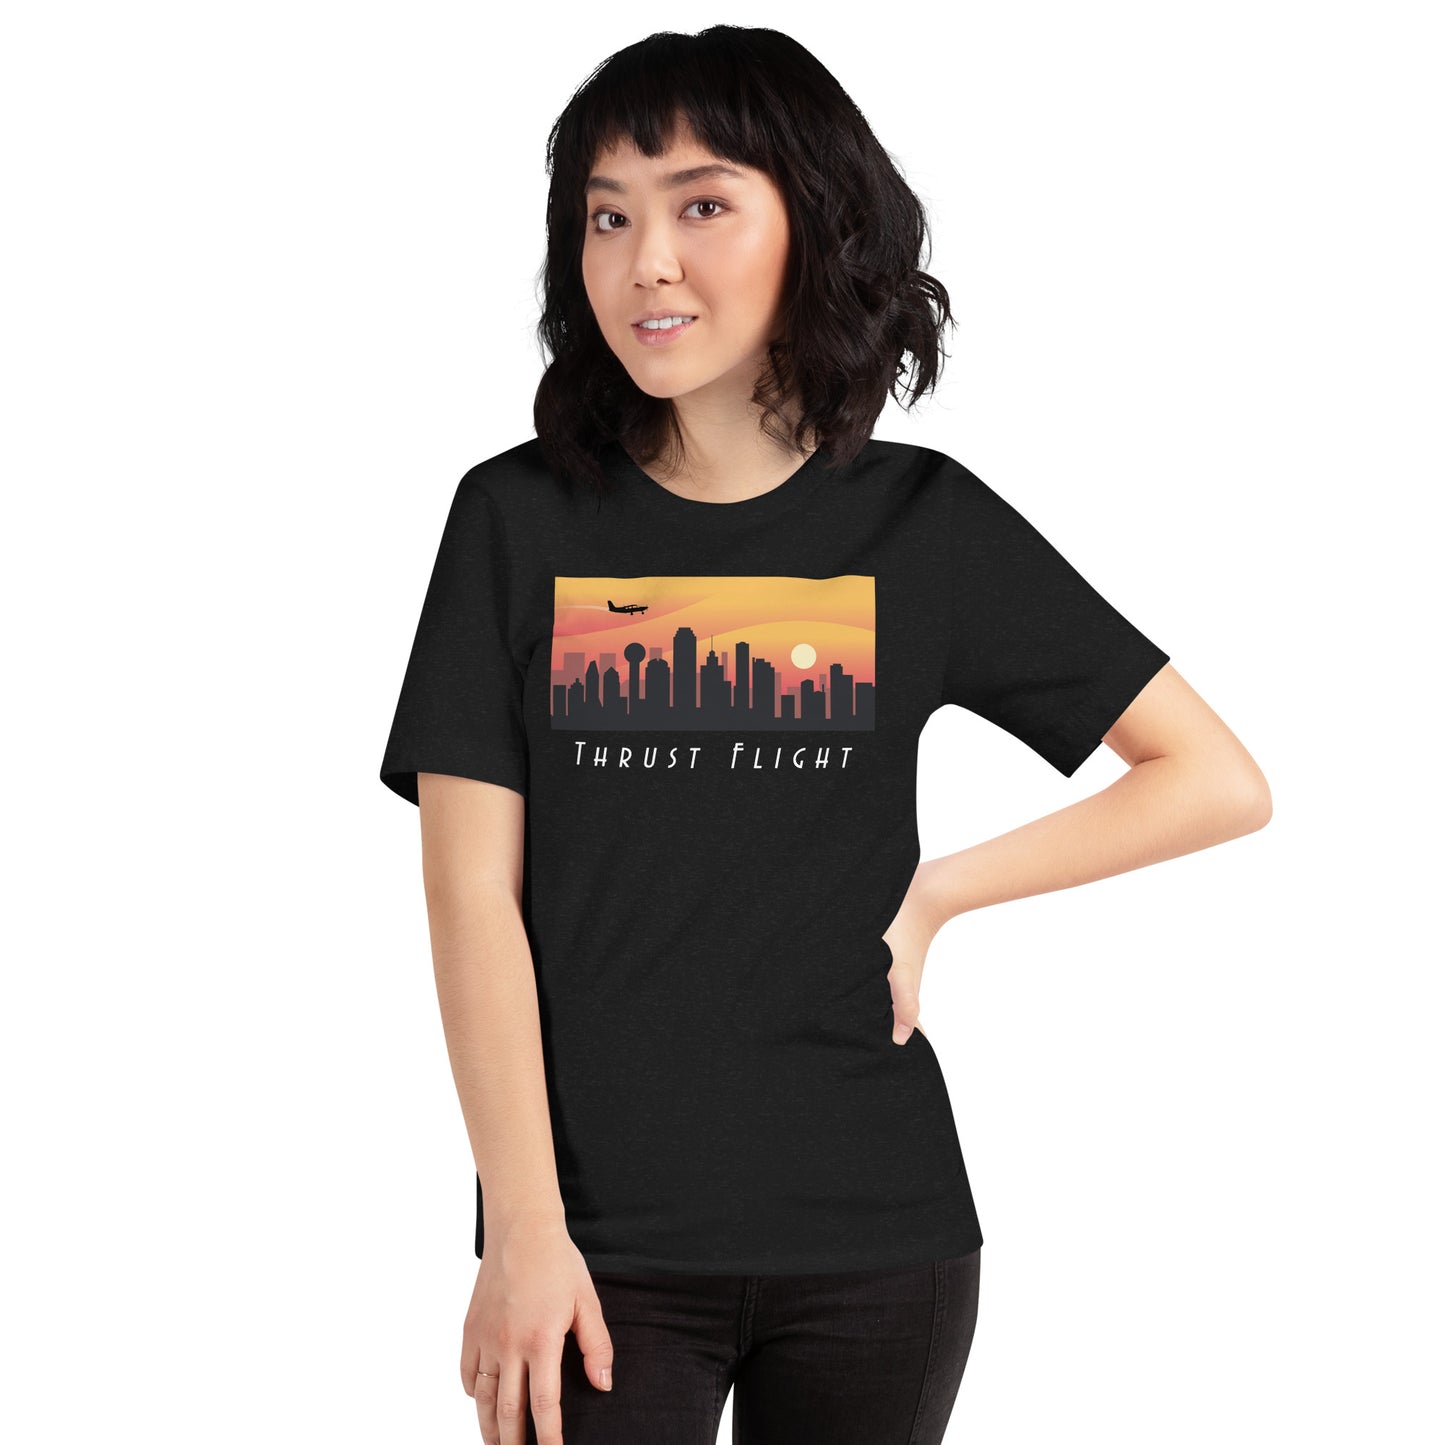 Dallas Skyline T-shirt